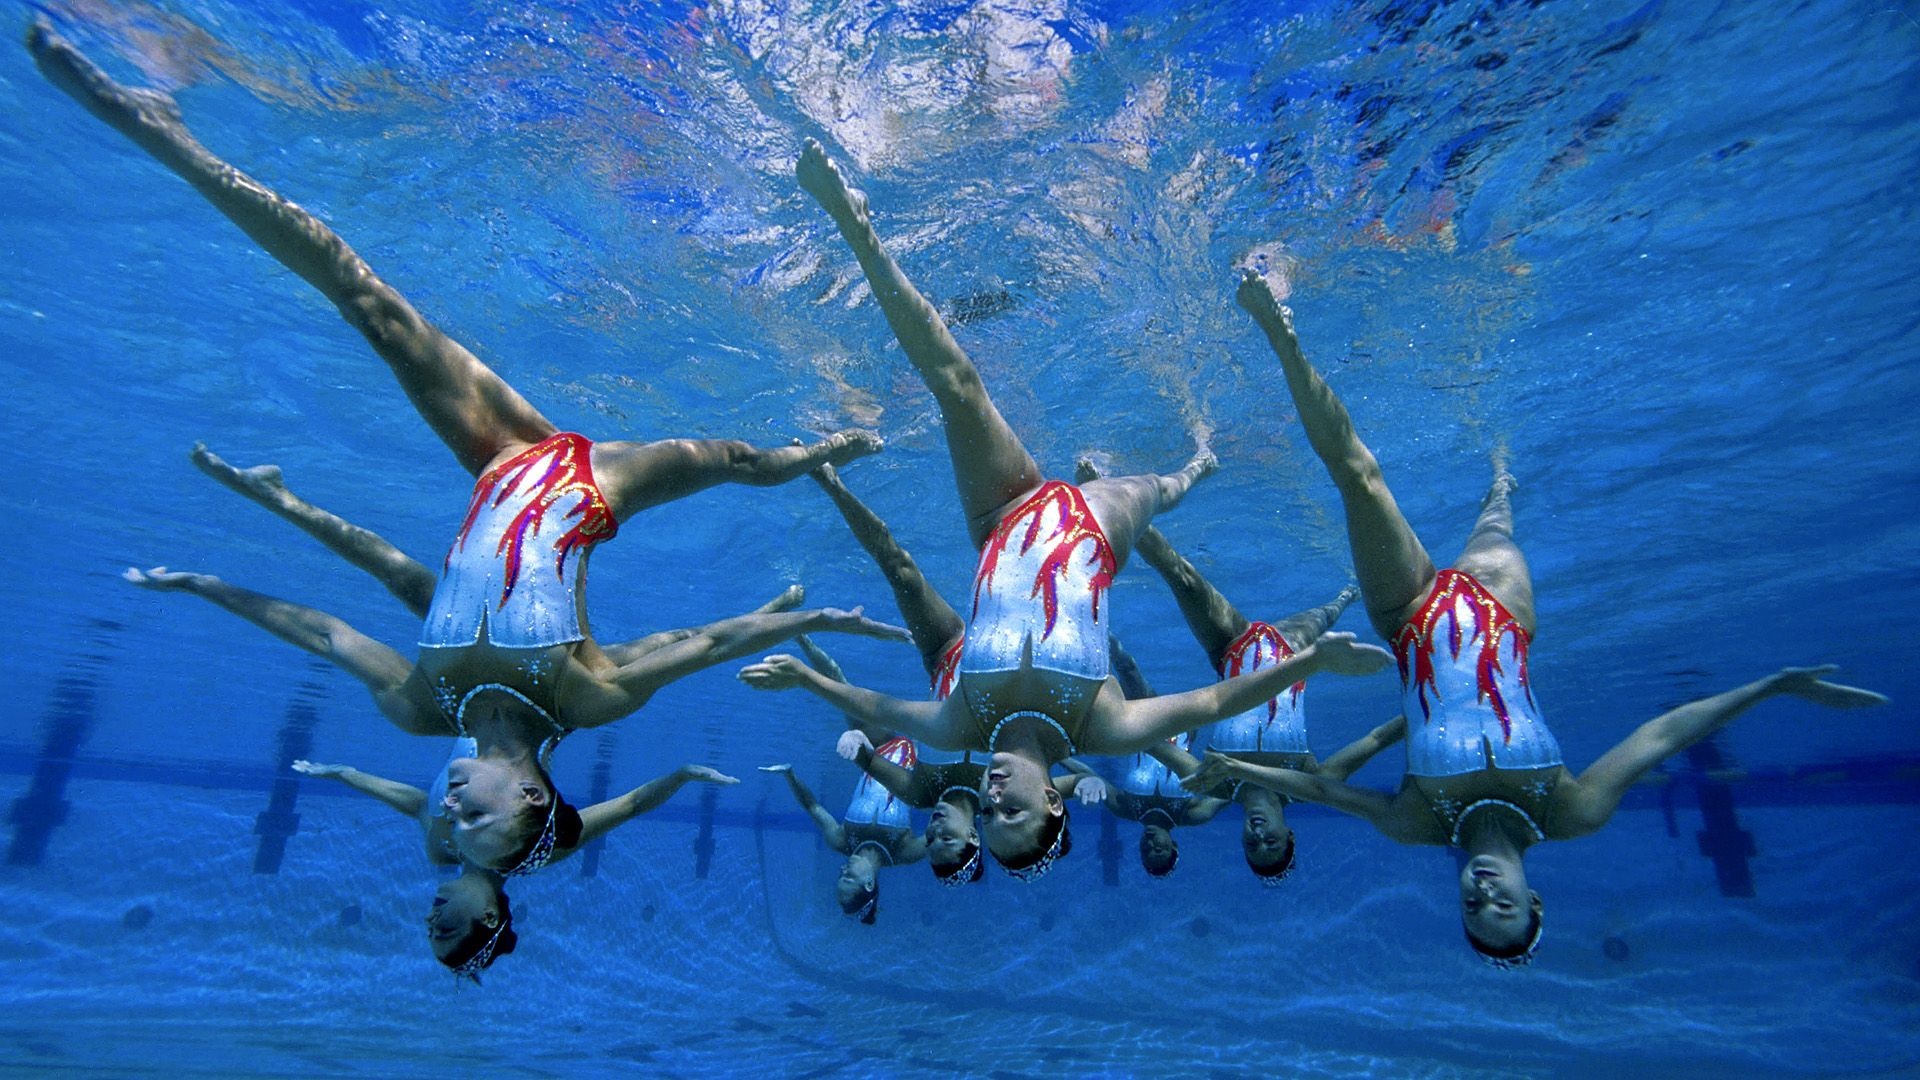 Underwater synchro, Synchronized swimmer's view, Fluid synchronized motion, Graceful aquatic dance, 1920x1080 Full HD Desktop